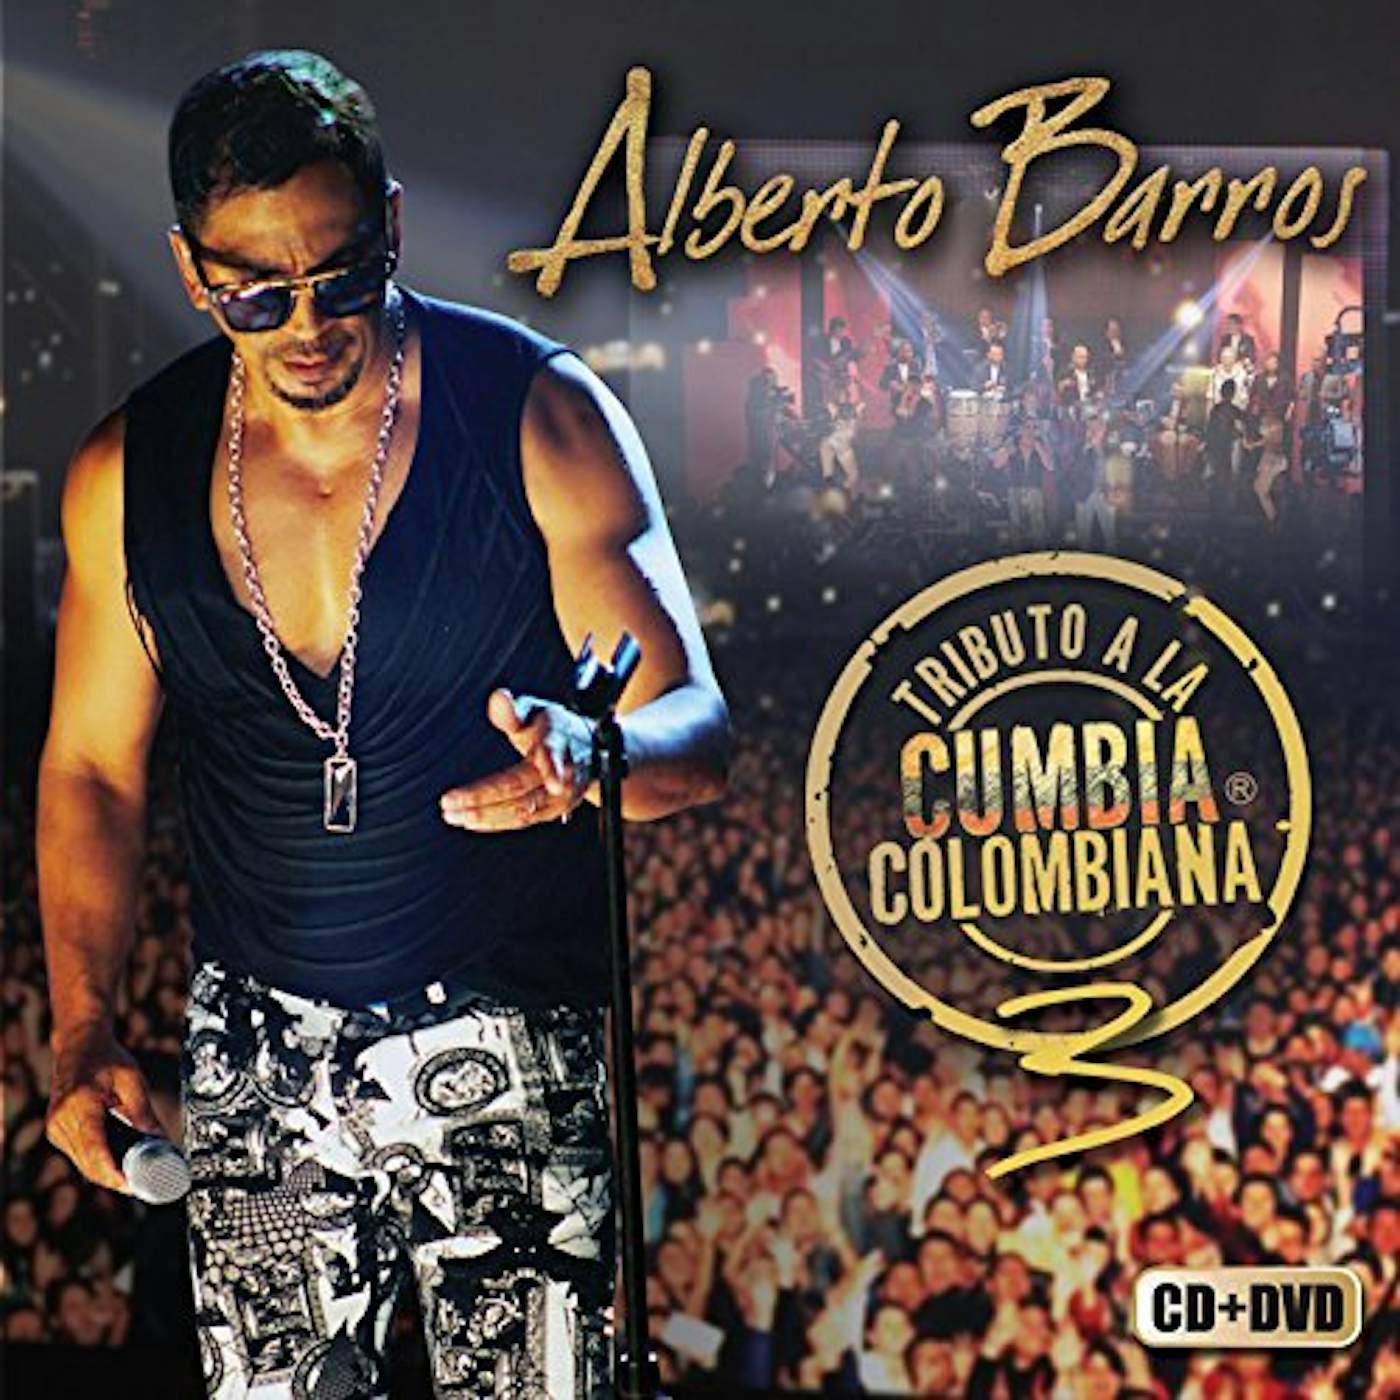 Alberto Barros TRIBUTO A LA CUMBIA COLOMBIANA VOL. 3 CD